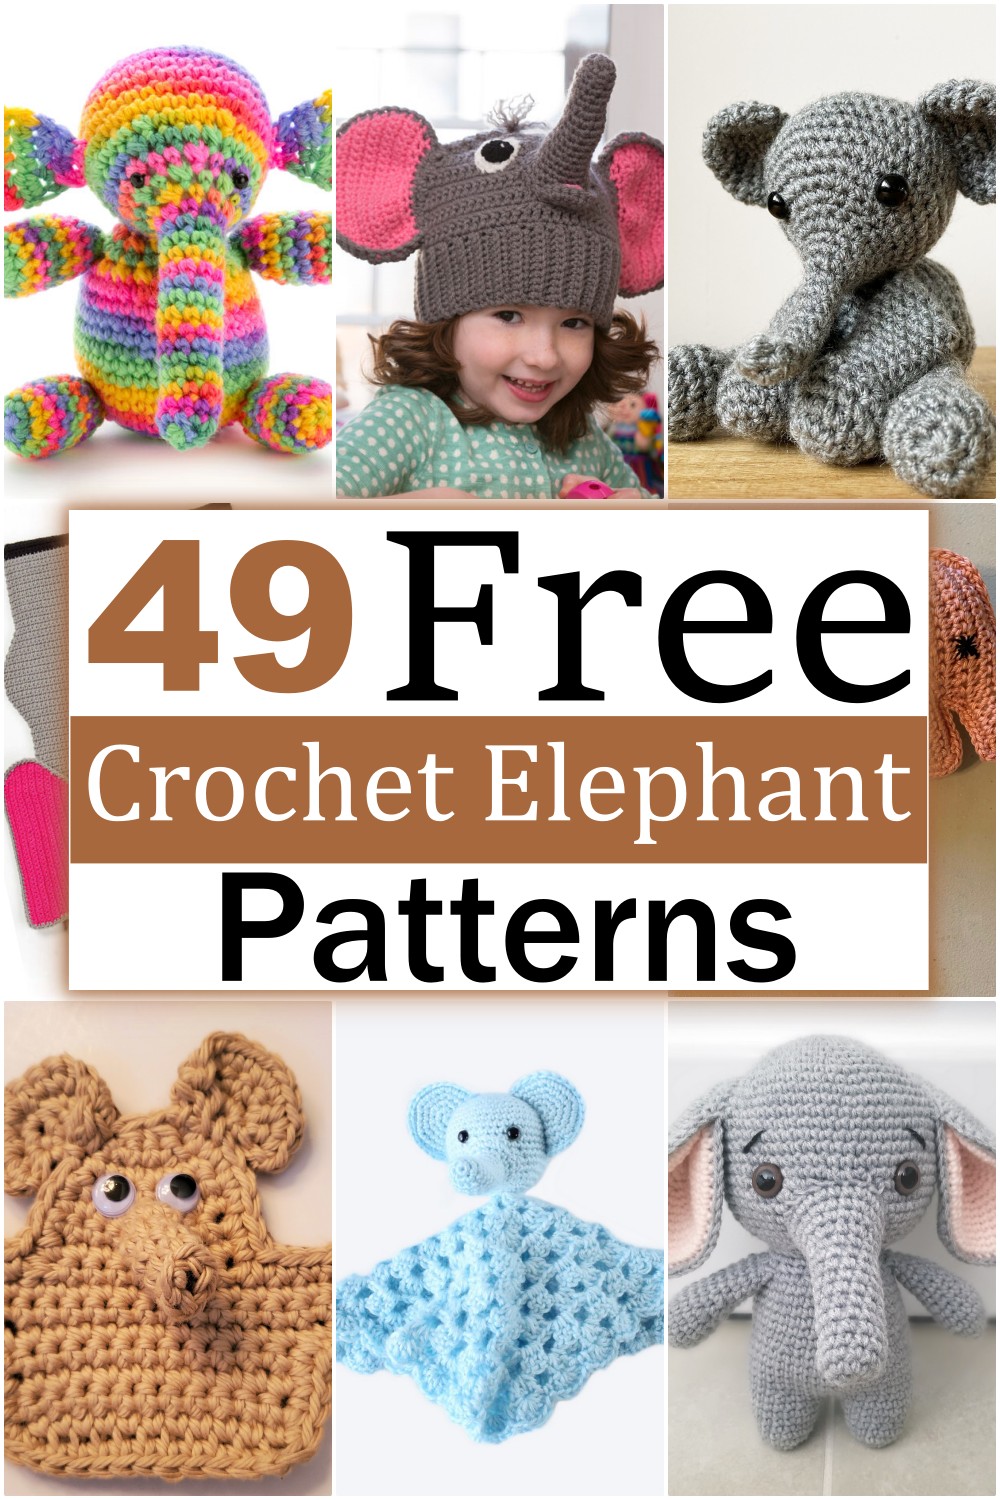 50 Free Crochet Elephant Patterns